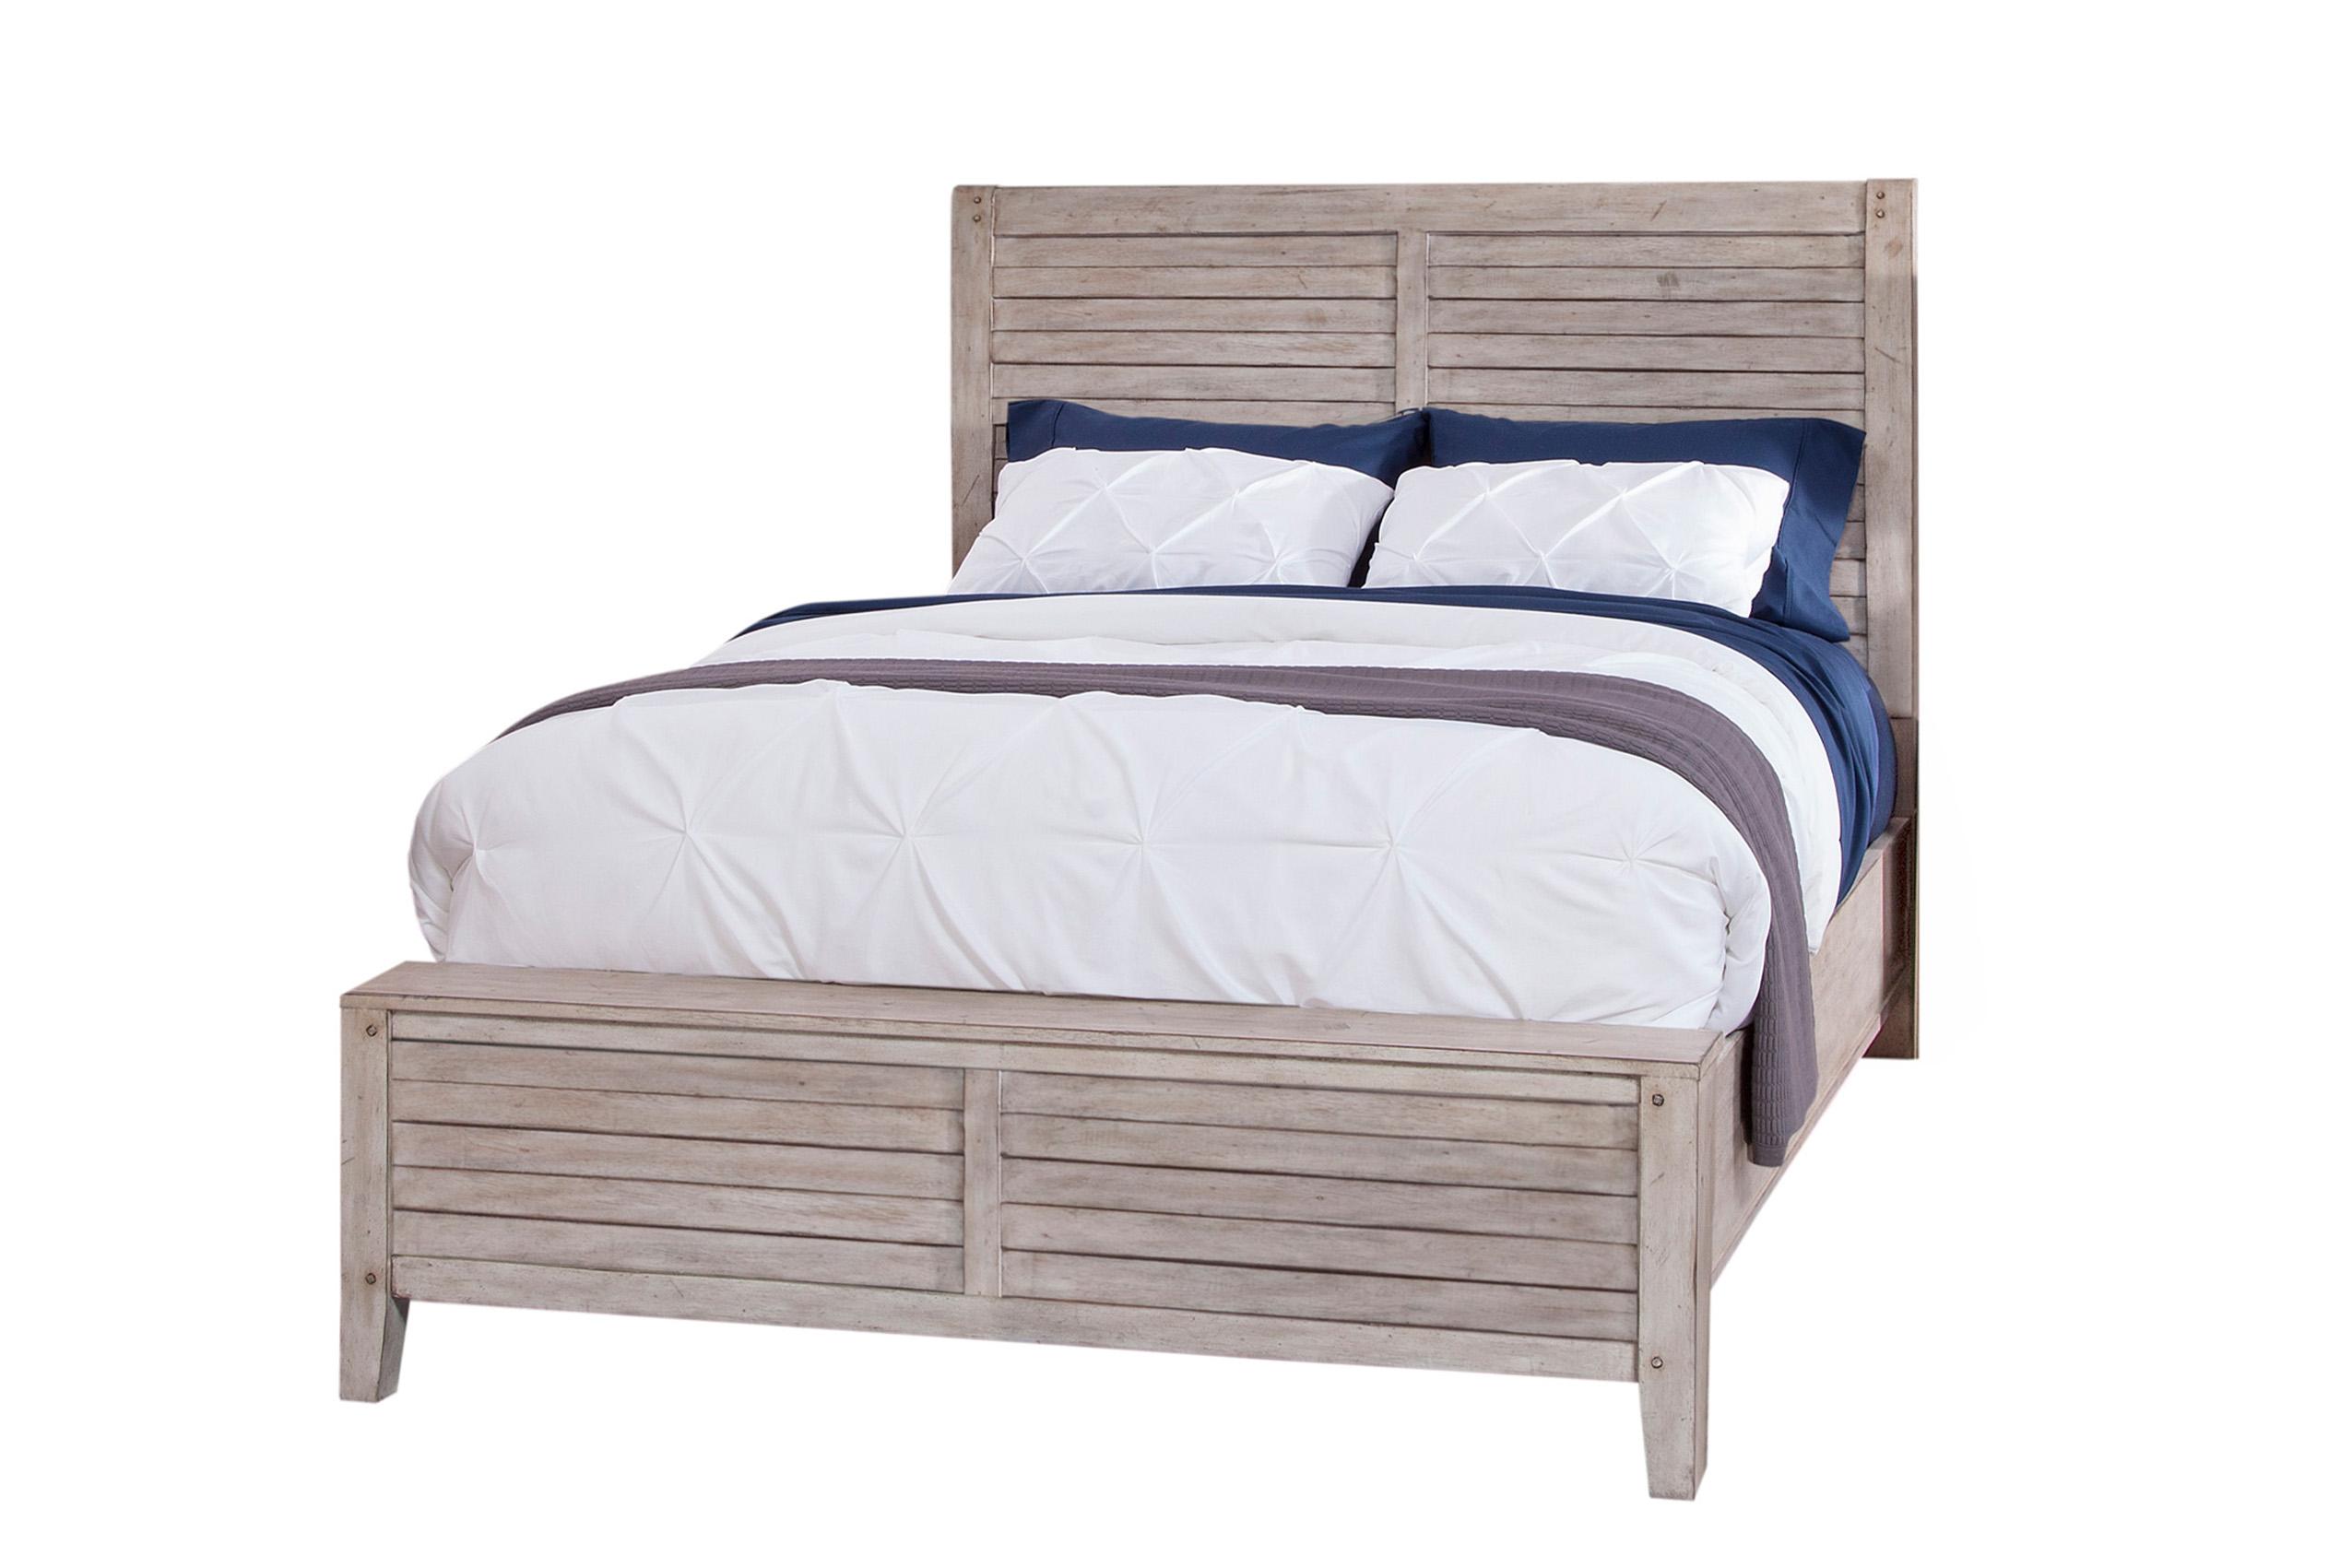 Classic, Traditional Panel Bed AURORA 2810-66PAN 2810-66PNPN in whitewash 